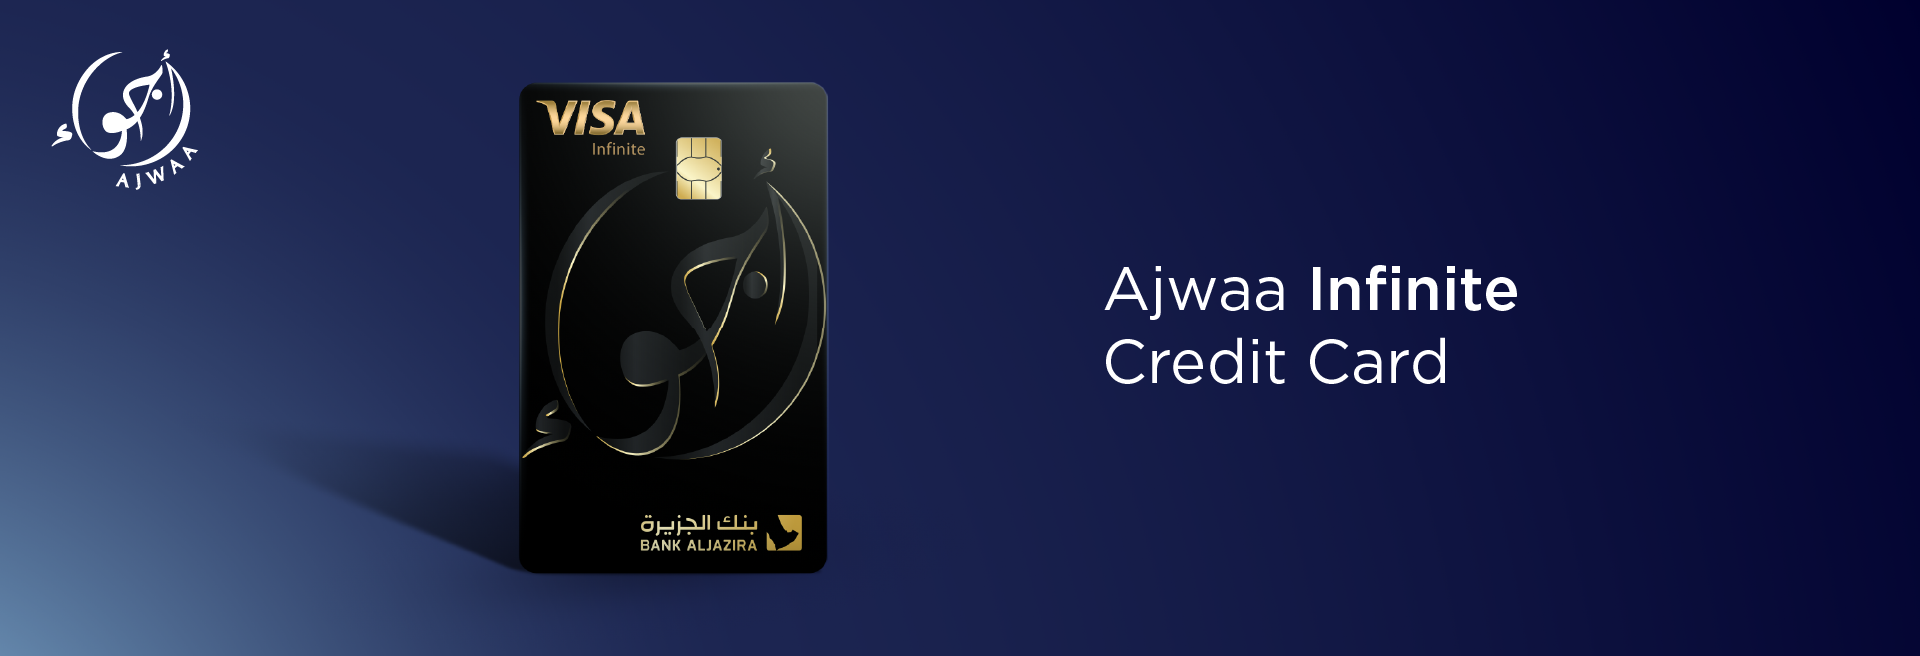 Ajwaa Infinite Credit Card